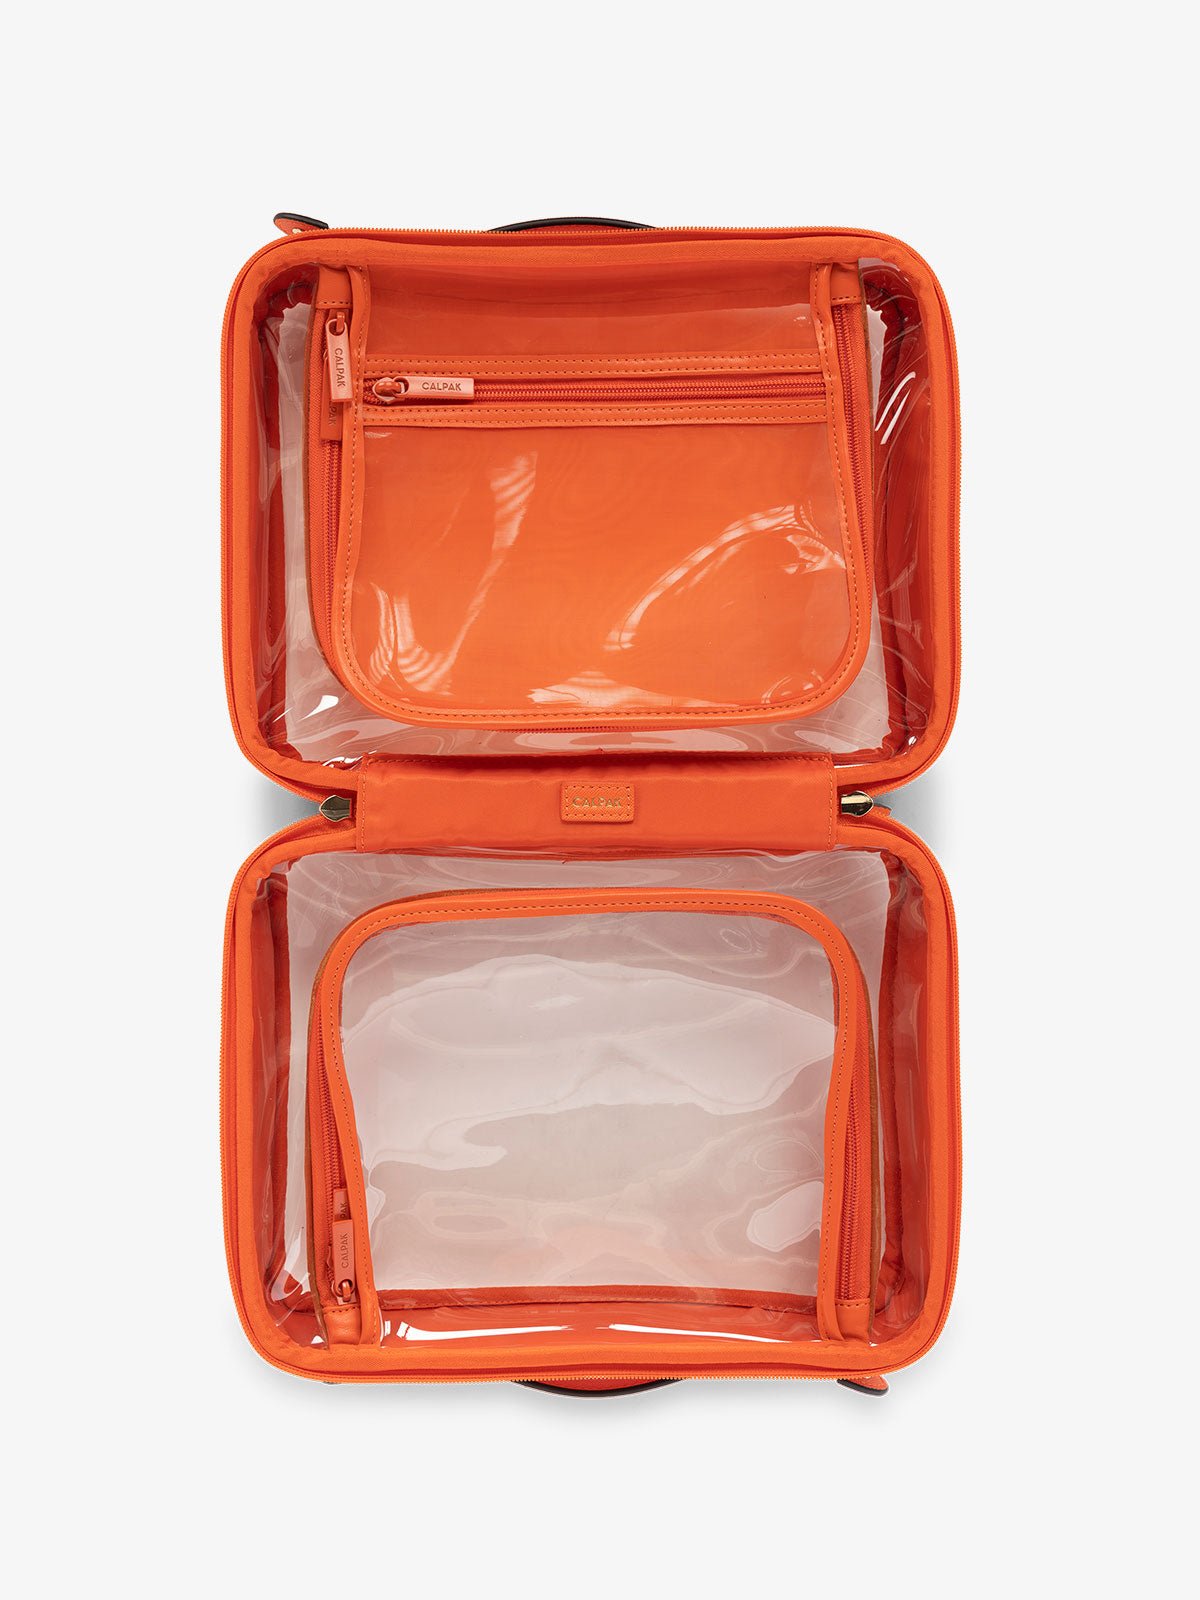 CALPAK large transparent water resistant travel makeup bag with compartments in papaya orange